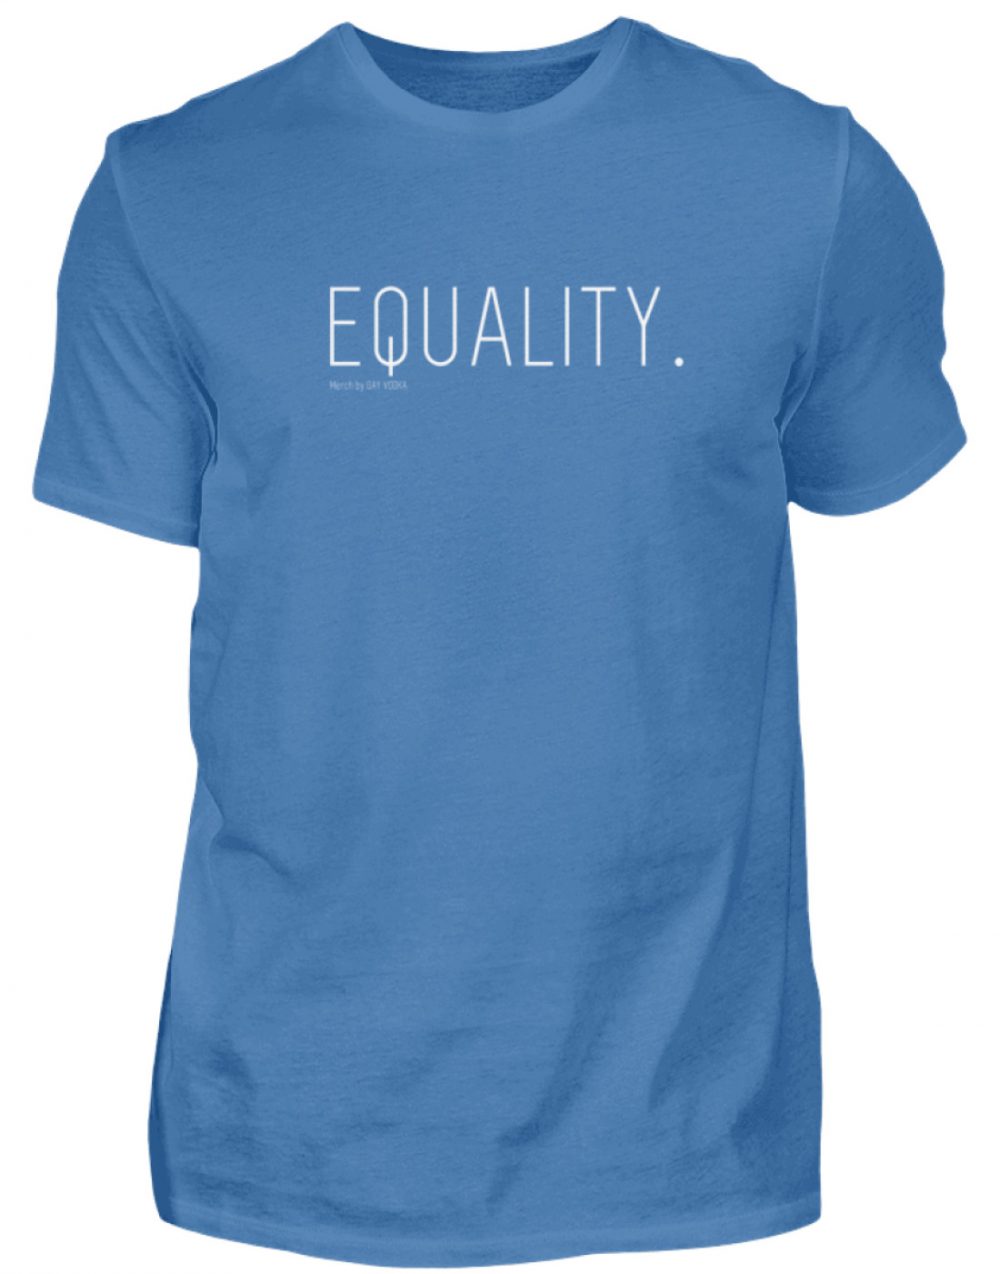 EQUALITY. - Herren Premiumshirt-2894